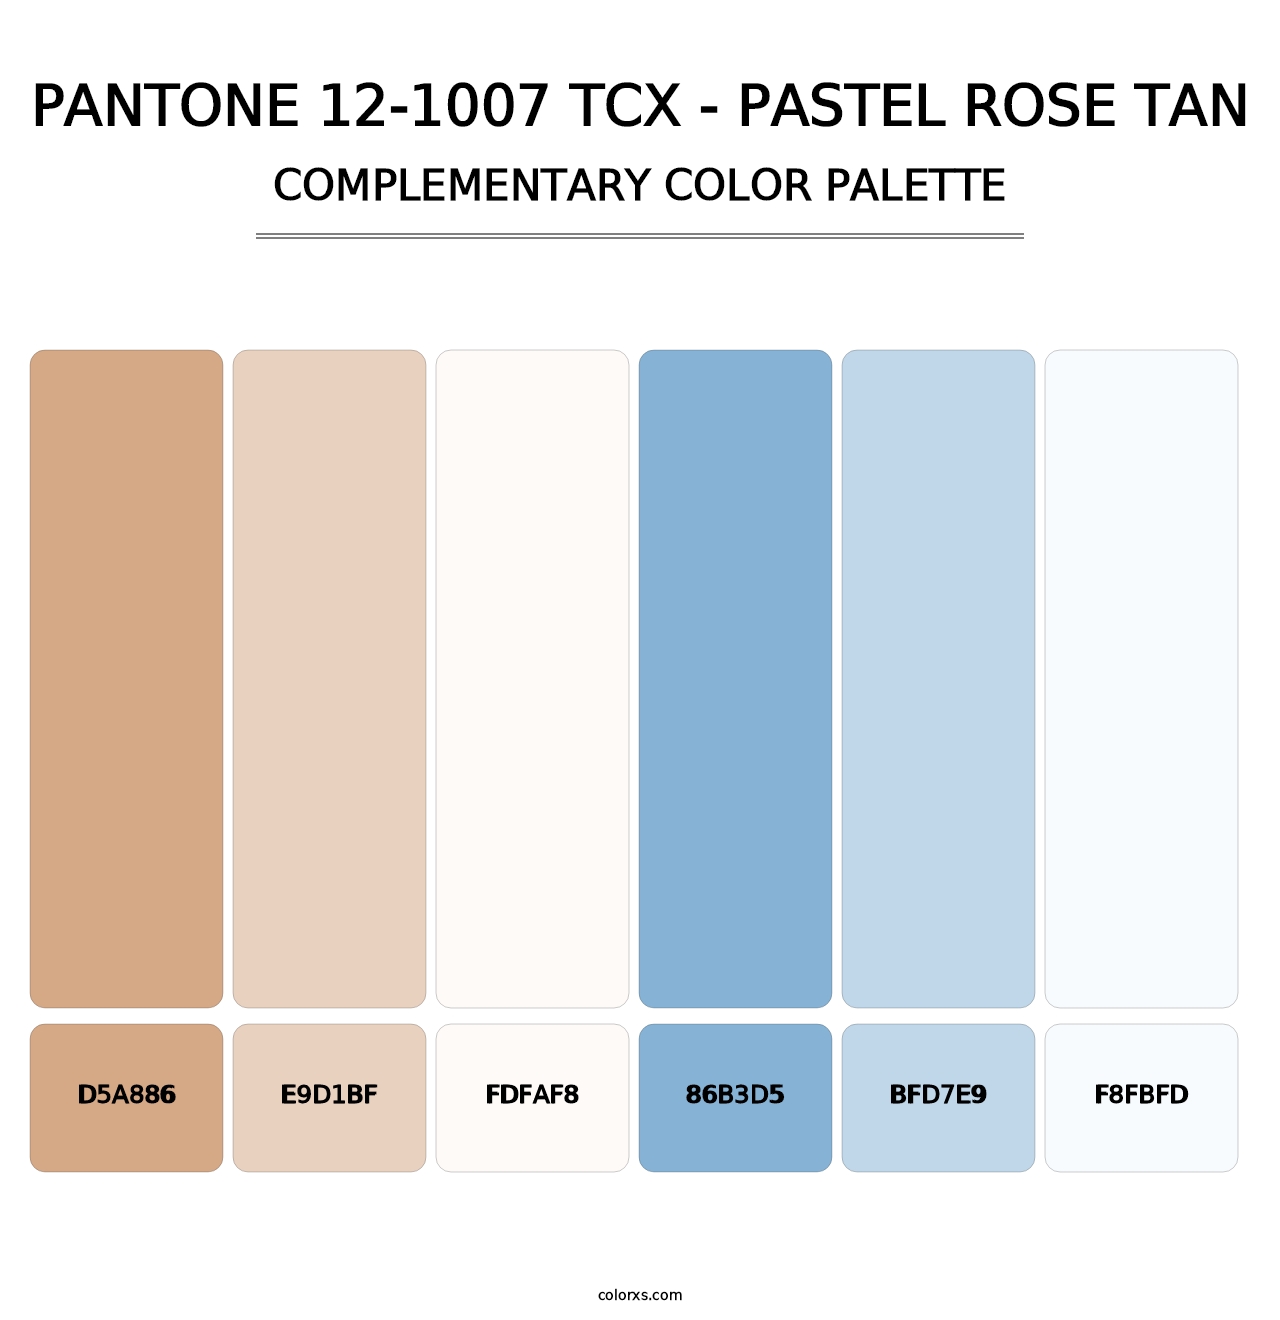 PANTONE 12-1007 TCX - Pastel Rose Tan - Complementary Color Palette